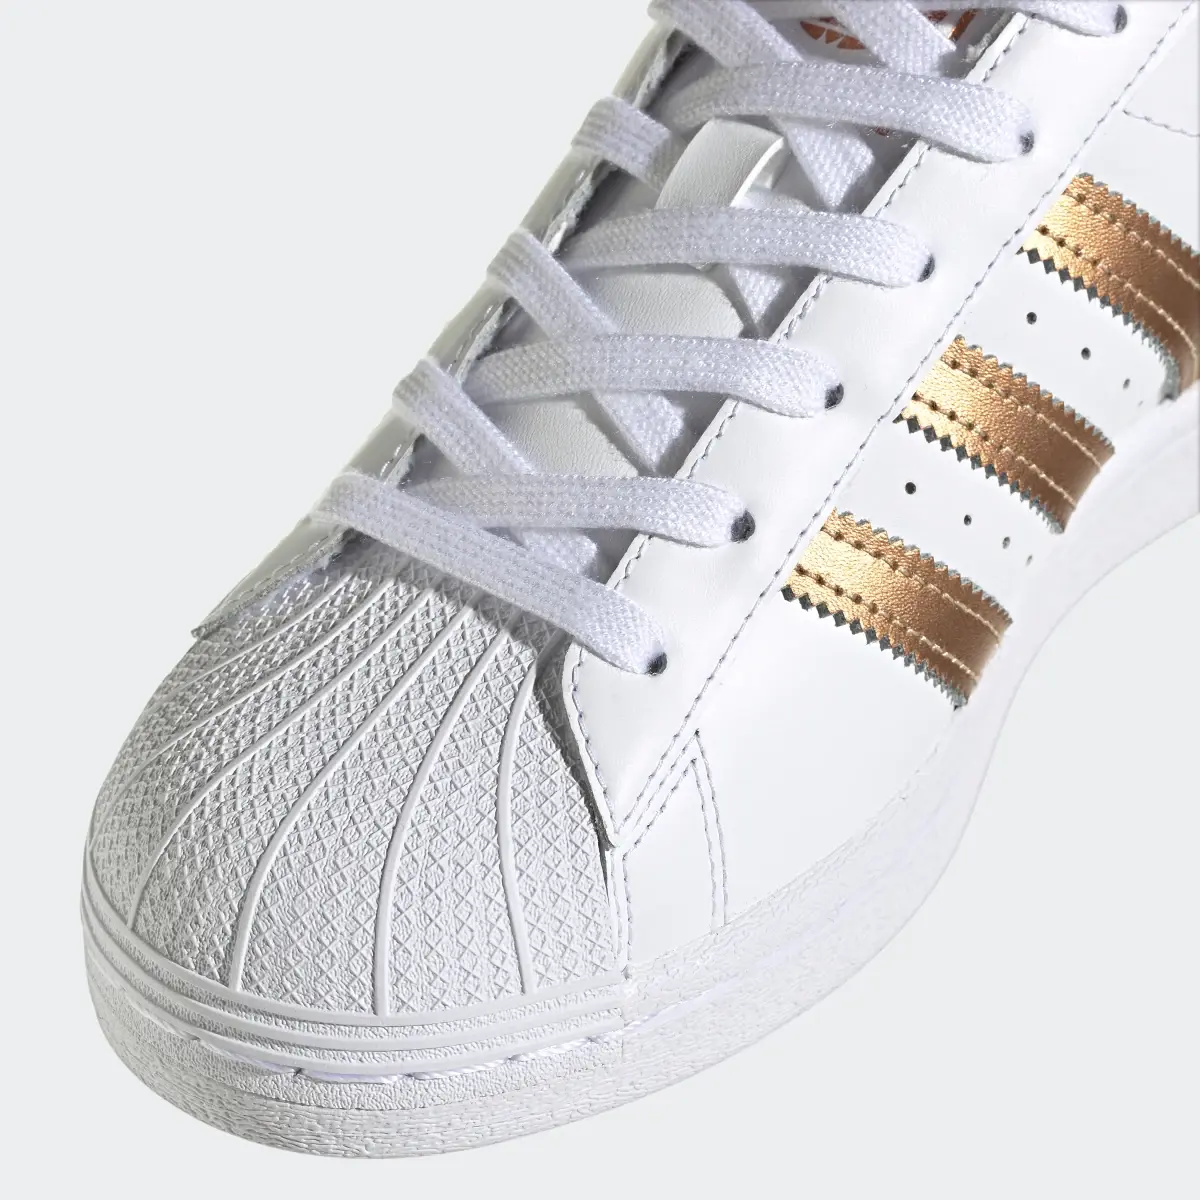 Adidas Superstar Shoes. 3